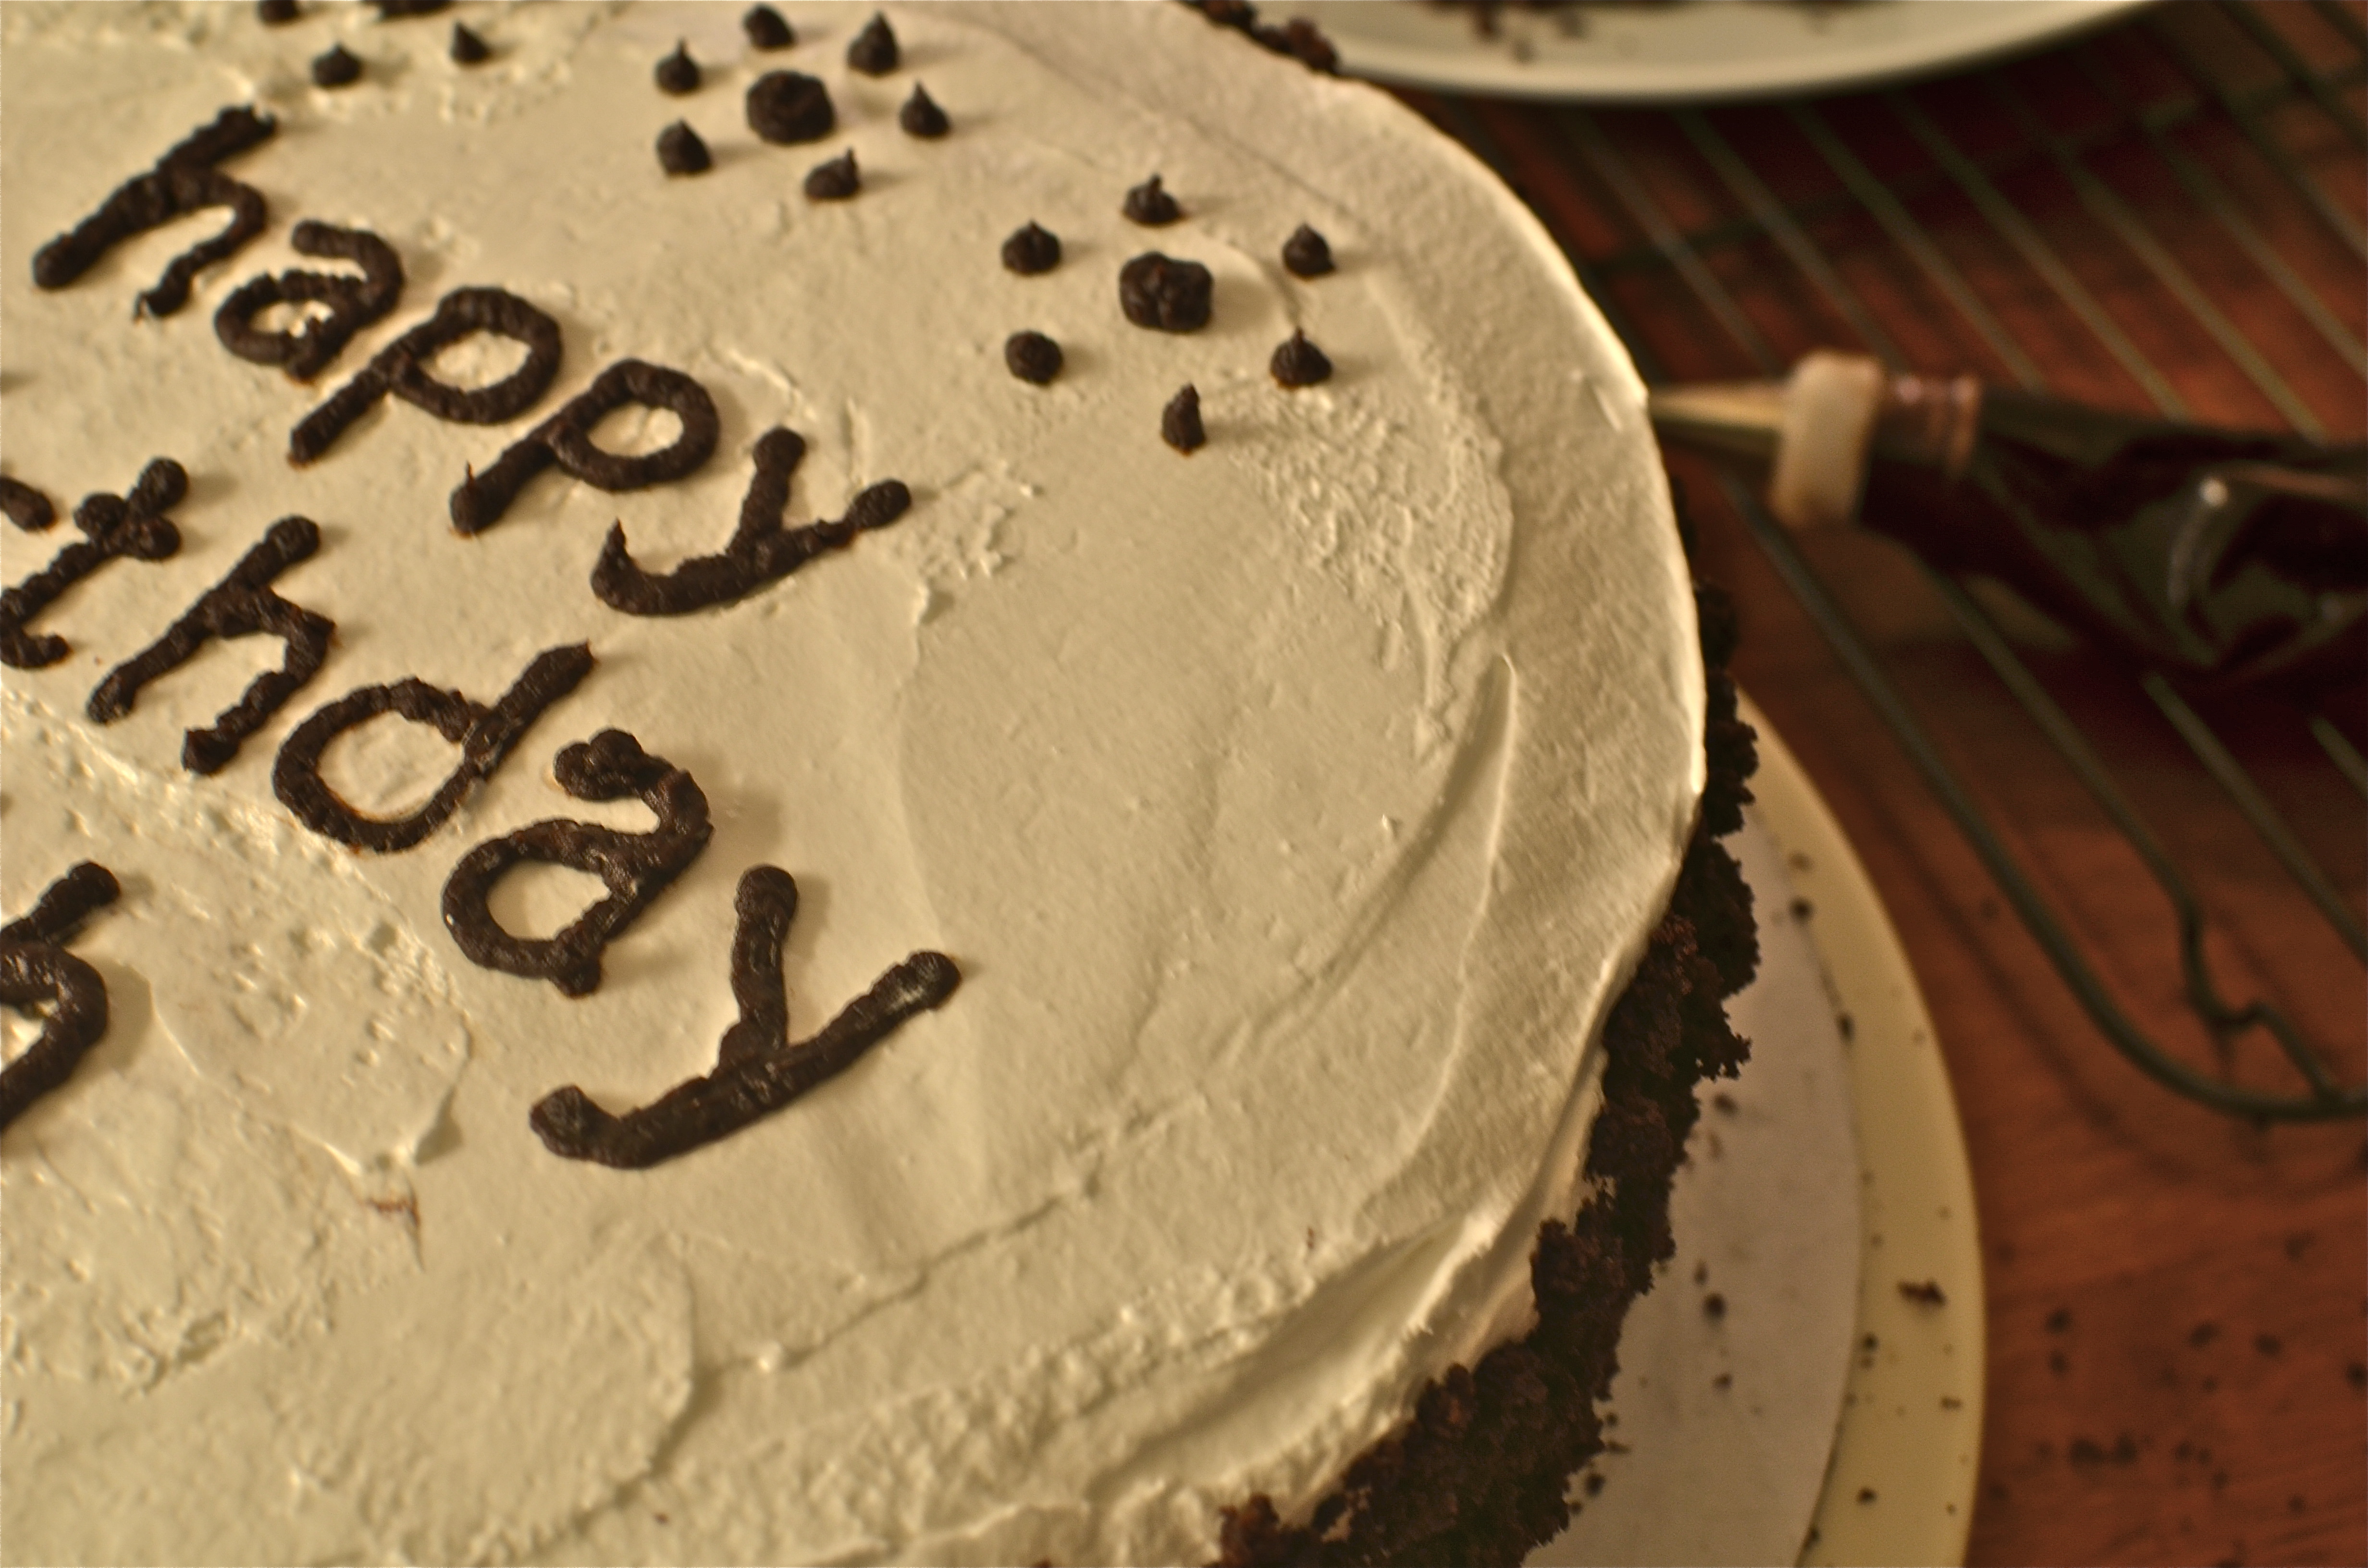 Celebration Cake, Dorie Greenspan, Devil's Food Cake, Italian Meringue, Marshallow Frosting